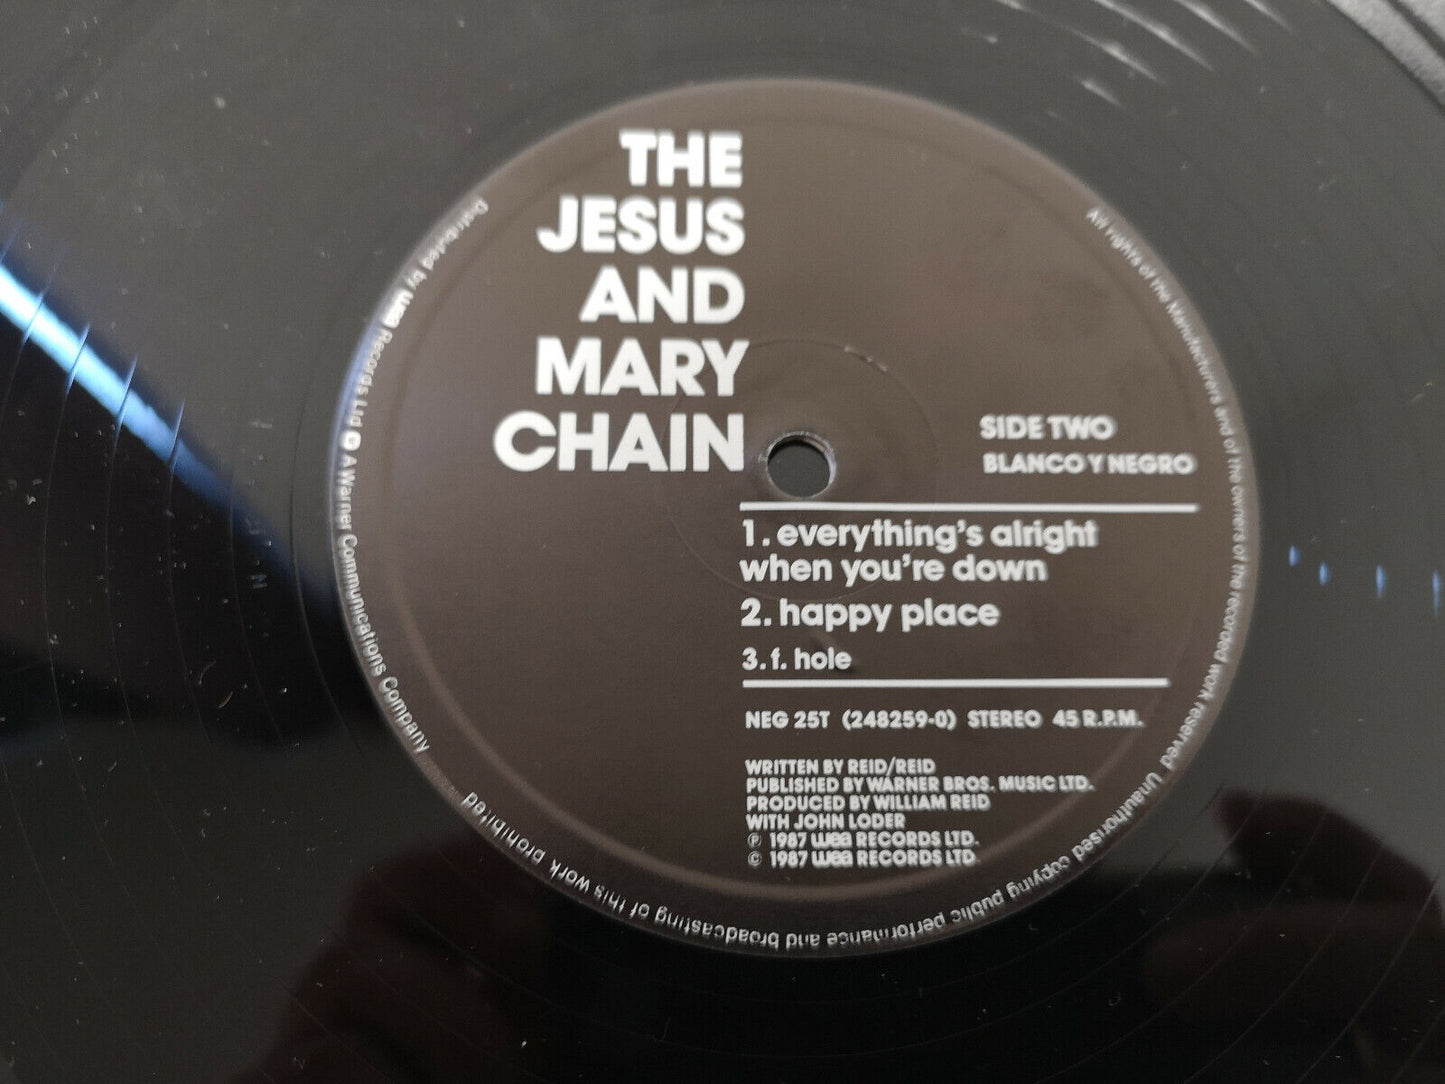 Jesus and Mary Chain "Happy When it Rains" Orig UK 1987 12" EP EX/M-